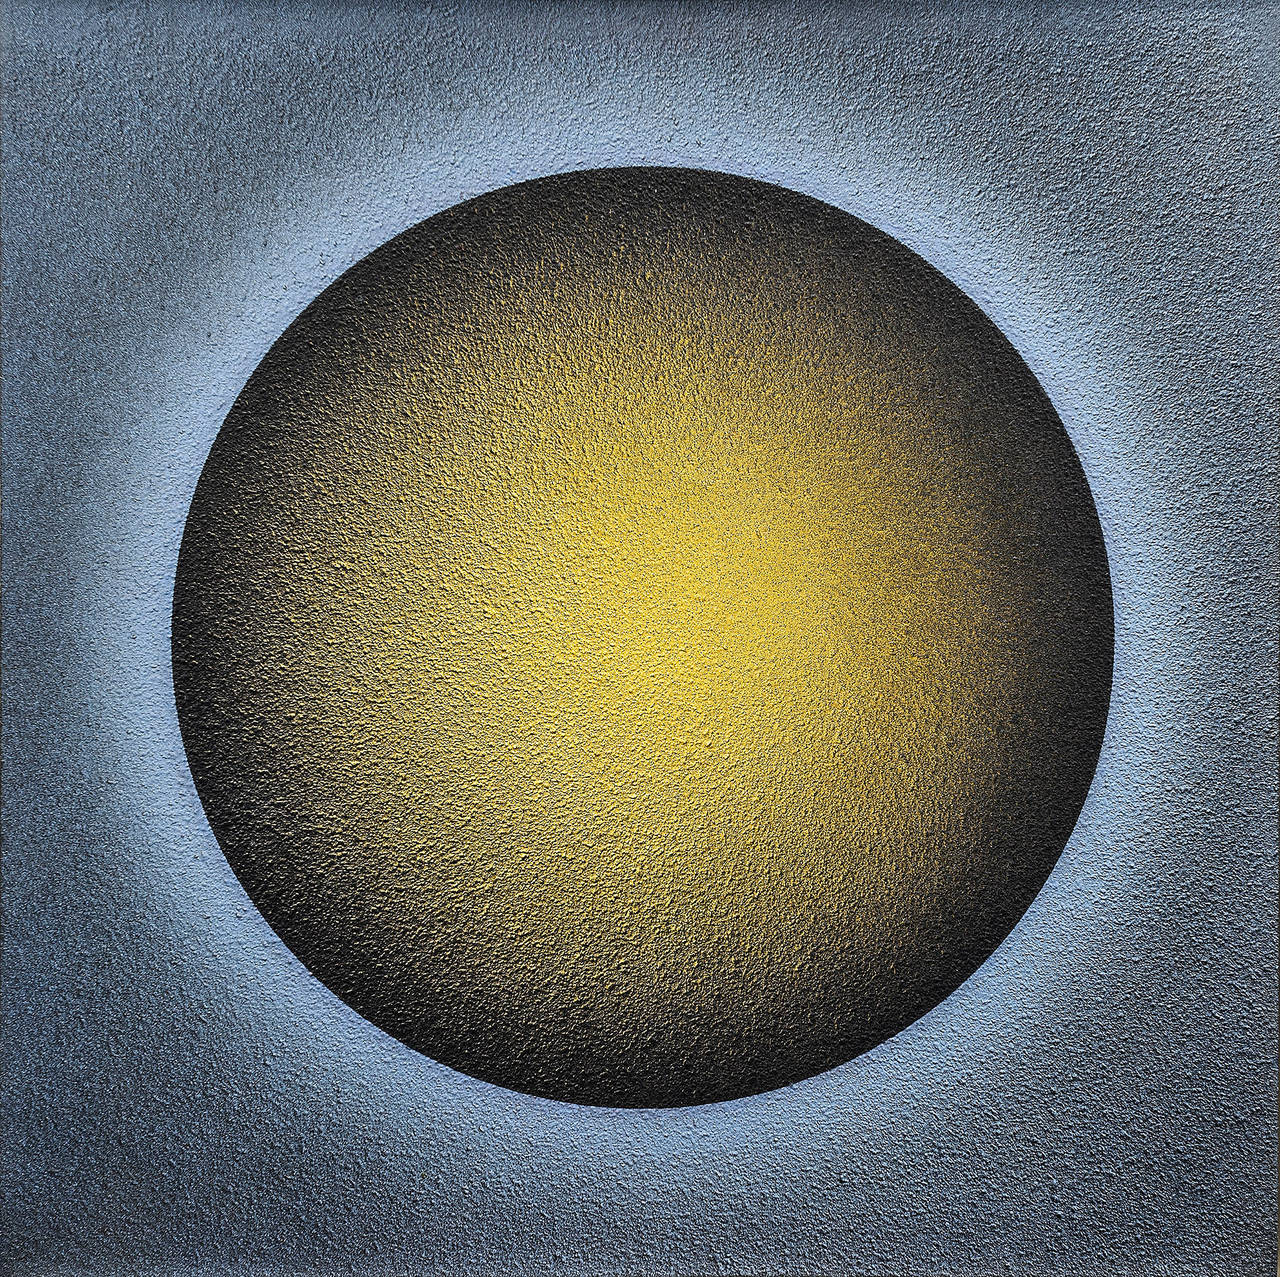 Tadasky / Tadasuke Kuwayama Abstract Painting - E-154 (Textured Yellow on Blue-Gray)